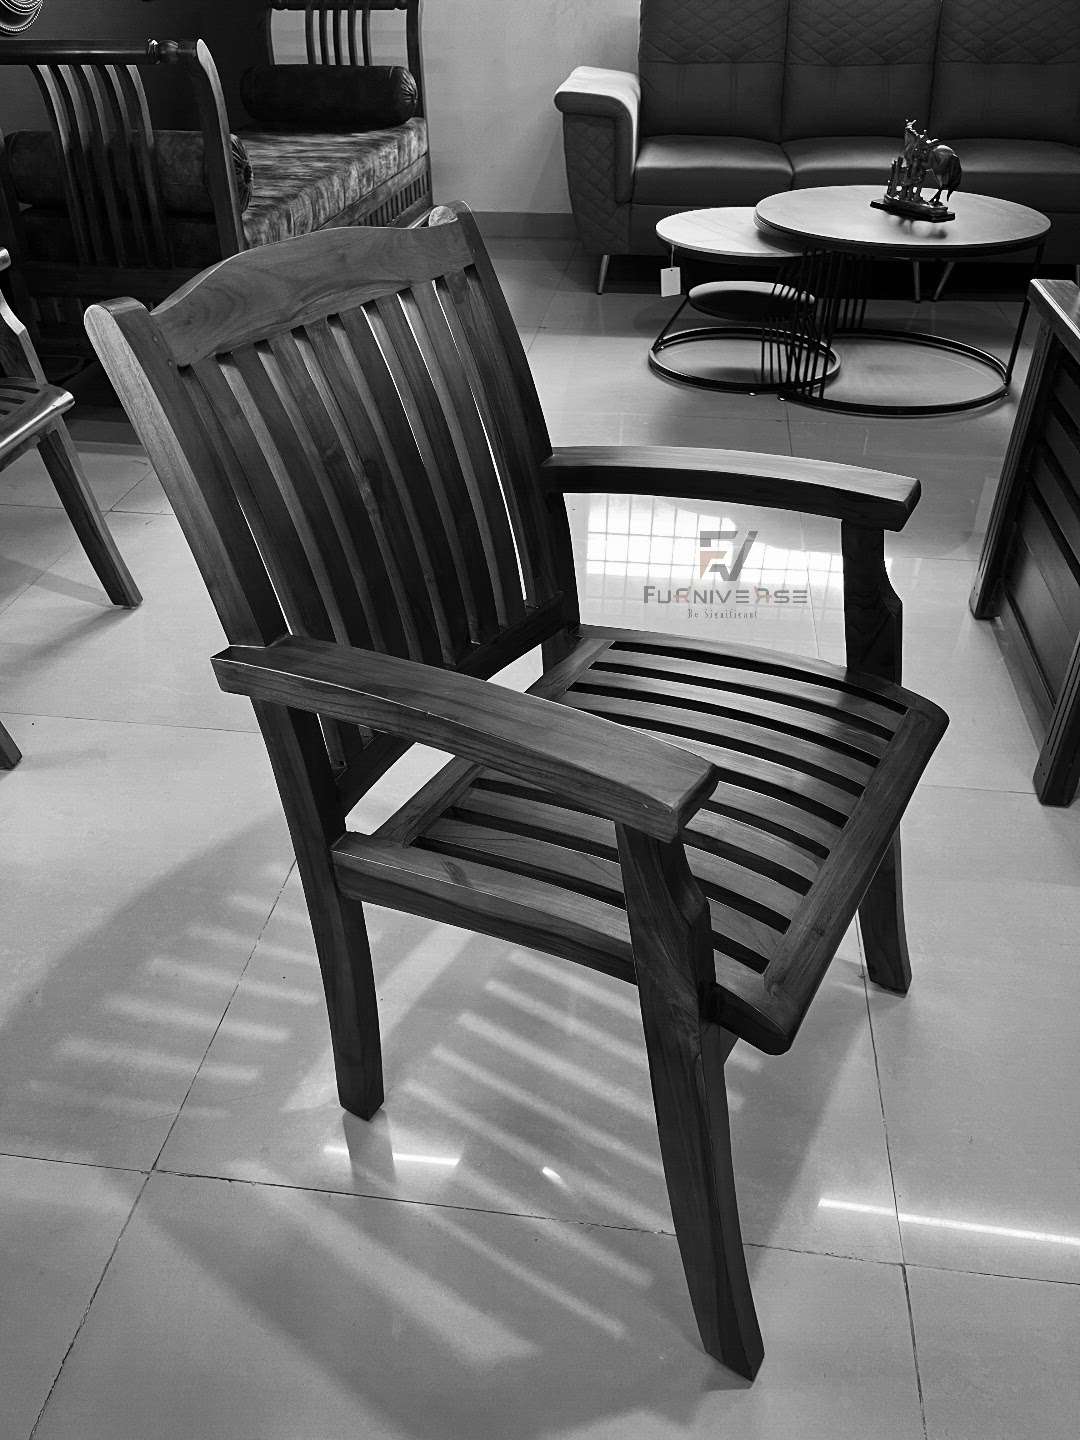 Designed chairs collection at Furniverse 🪑
 #furniturefabric  #furniversepalakkad  #furniture   #furniturecovers  #furnished  #furnituremurah  #ModularFurnitures  #furniturework  #furnitureideas  #modernhome  #modernhouse  #moderndesign  #modernhousedesigns  #sitoutchair  #sitoutdesign  #sitout  #DiningChairs  #chair  #HIGH_BACK_CHAIR  #Relaxation  #relax  #relaxingchair  #relax  #relaxationtime  #kolohindi  #koloapp  #koloviral  #kolopost  #kolo-ed  #kolovil  #koloamaterials  #kolotipes  #kolodelhi  #kolofolowers  #koło  #koloindia